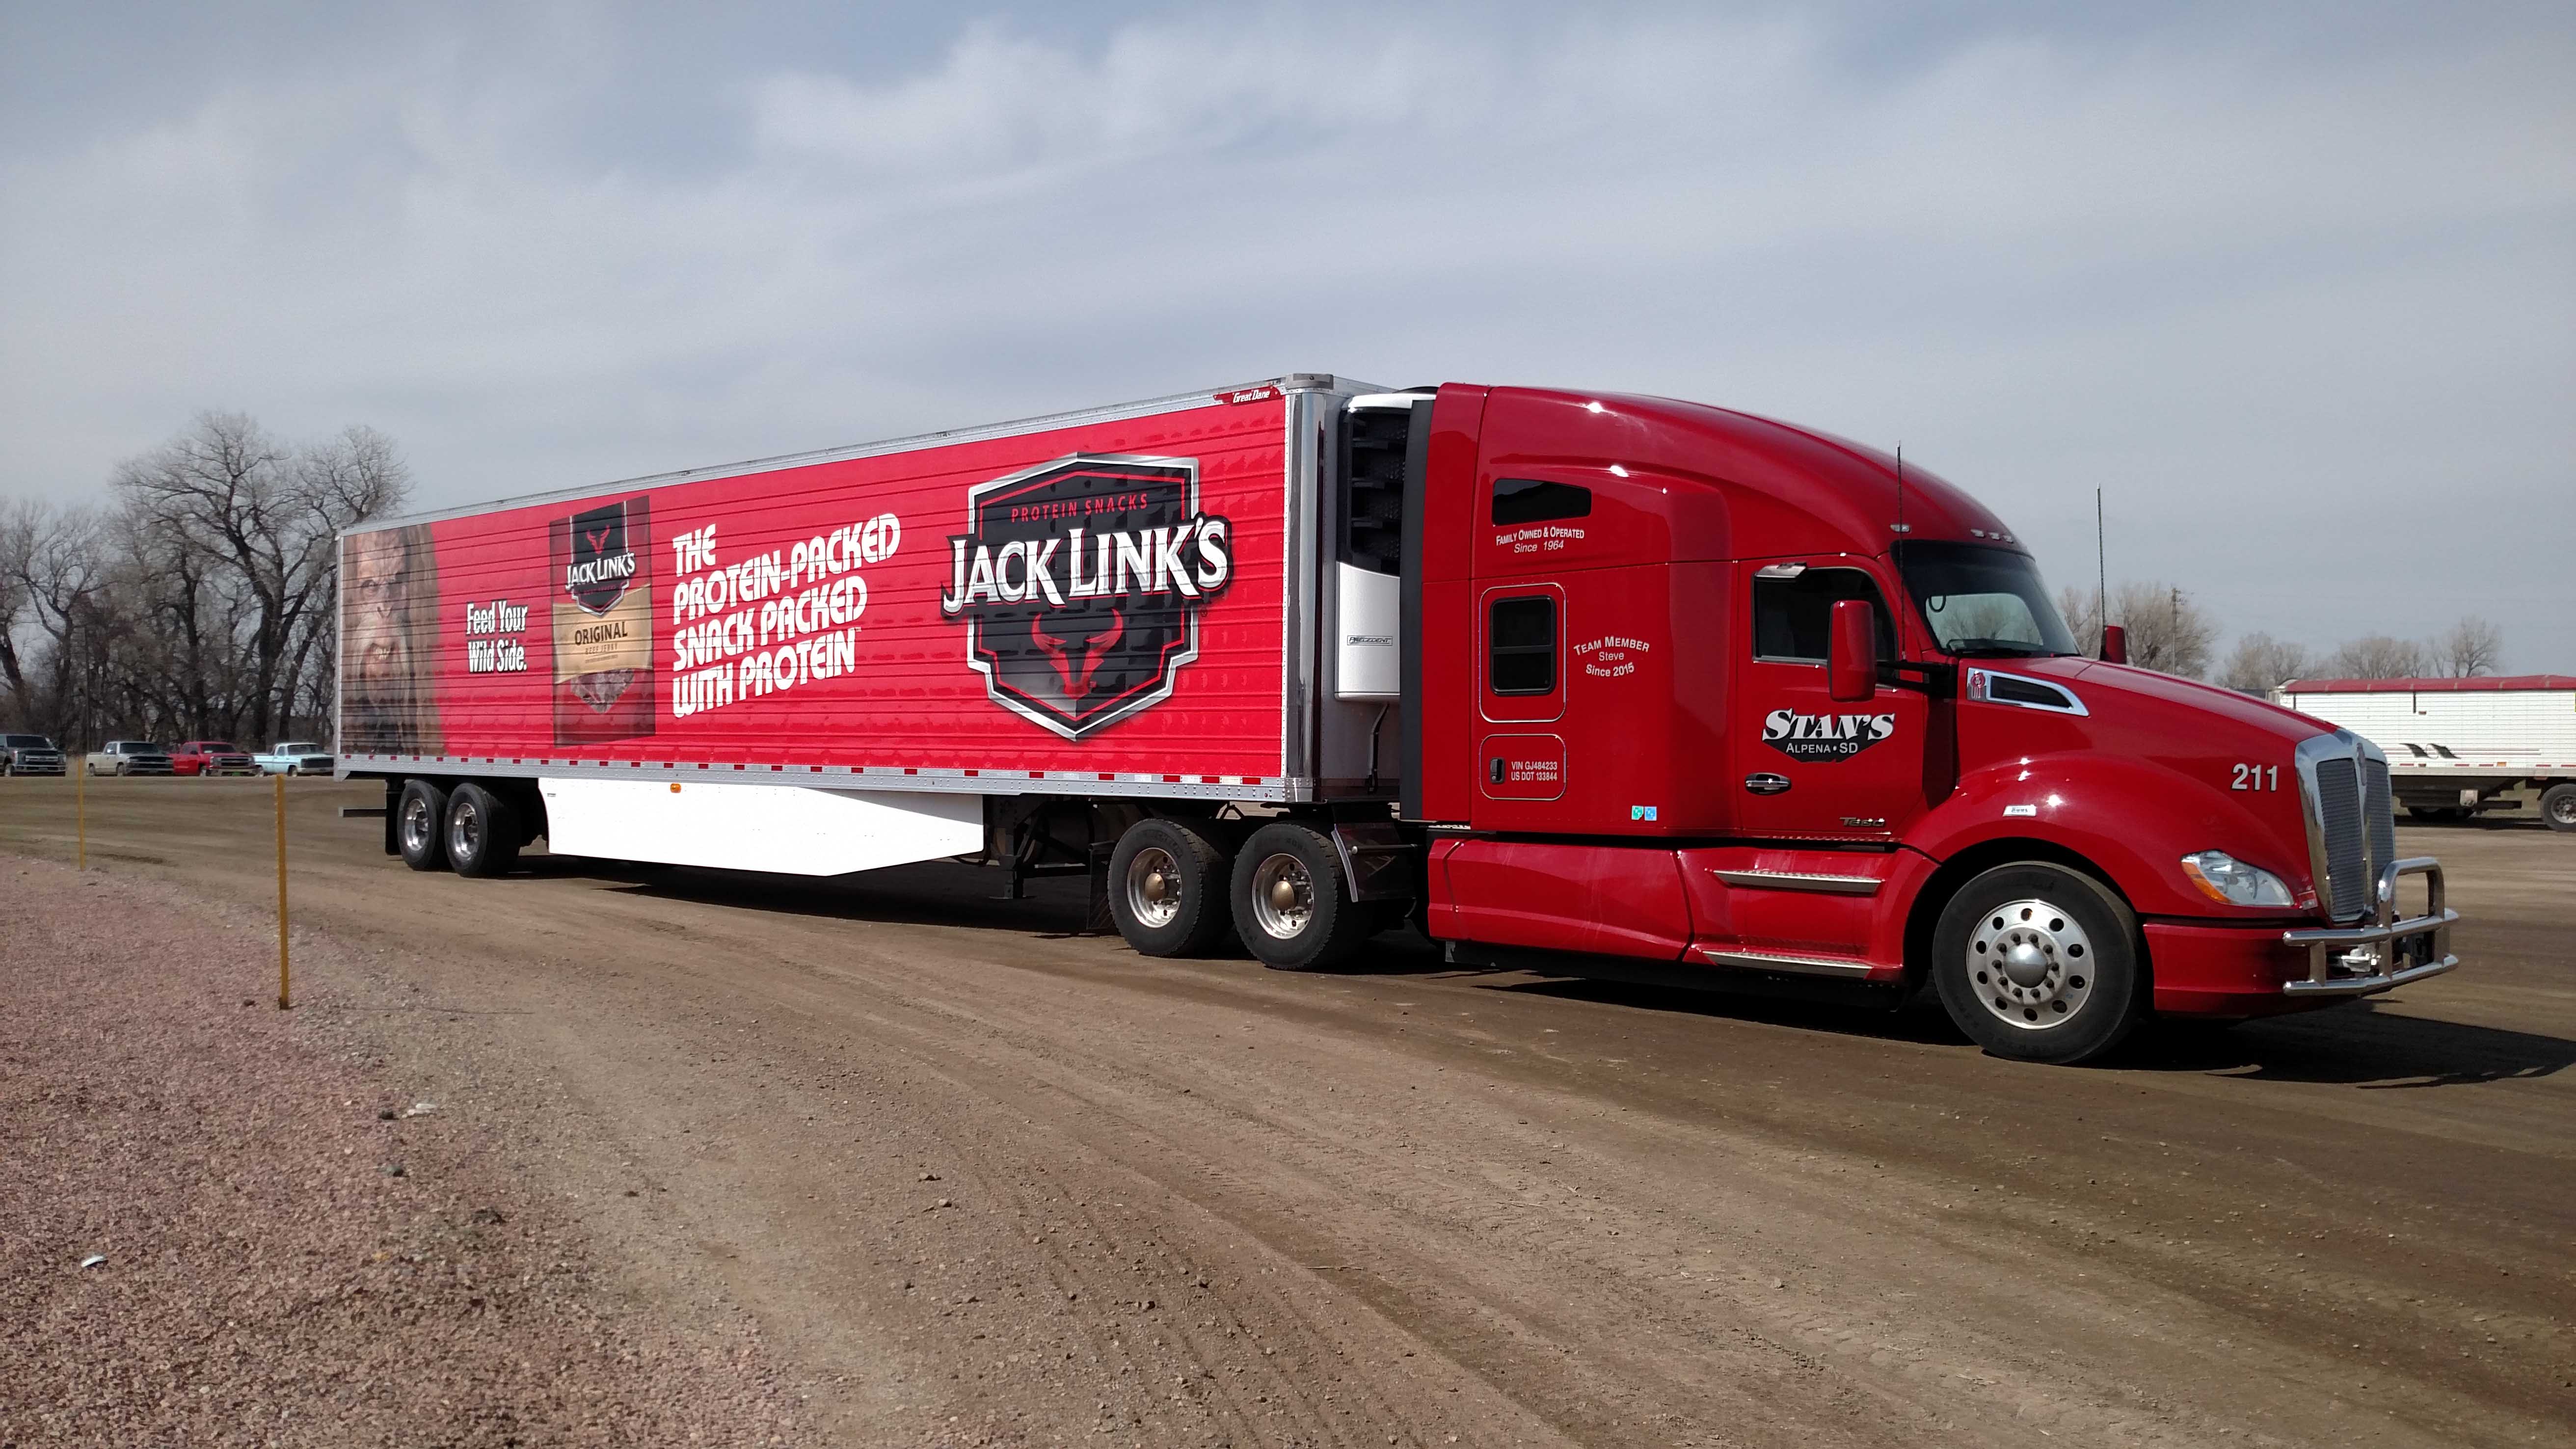 Jack Links trailer wrap full trailer wrap vehicle Minneapolis Eden Prairie Edina Bloomington